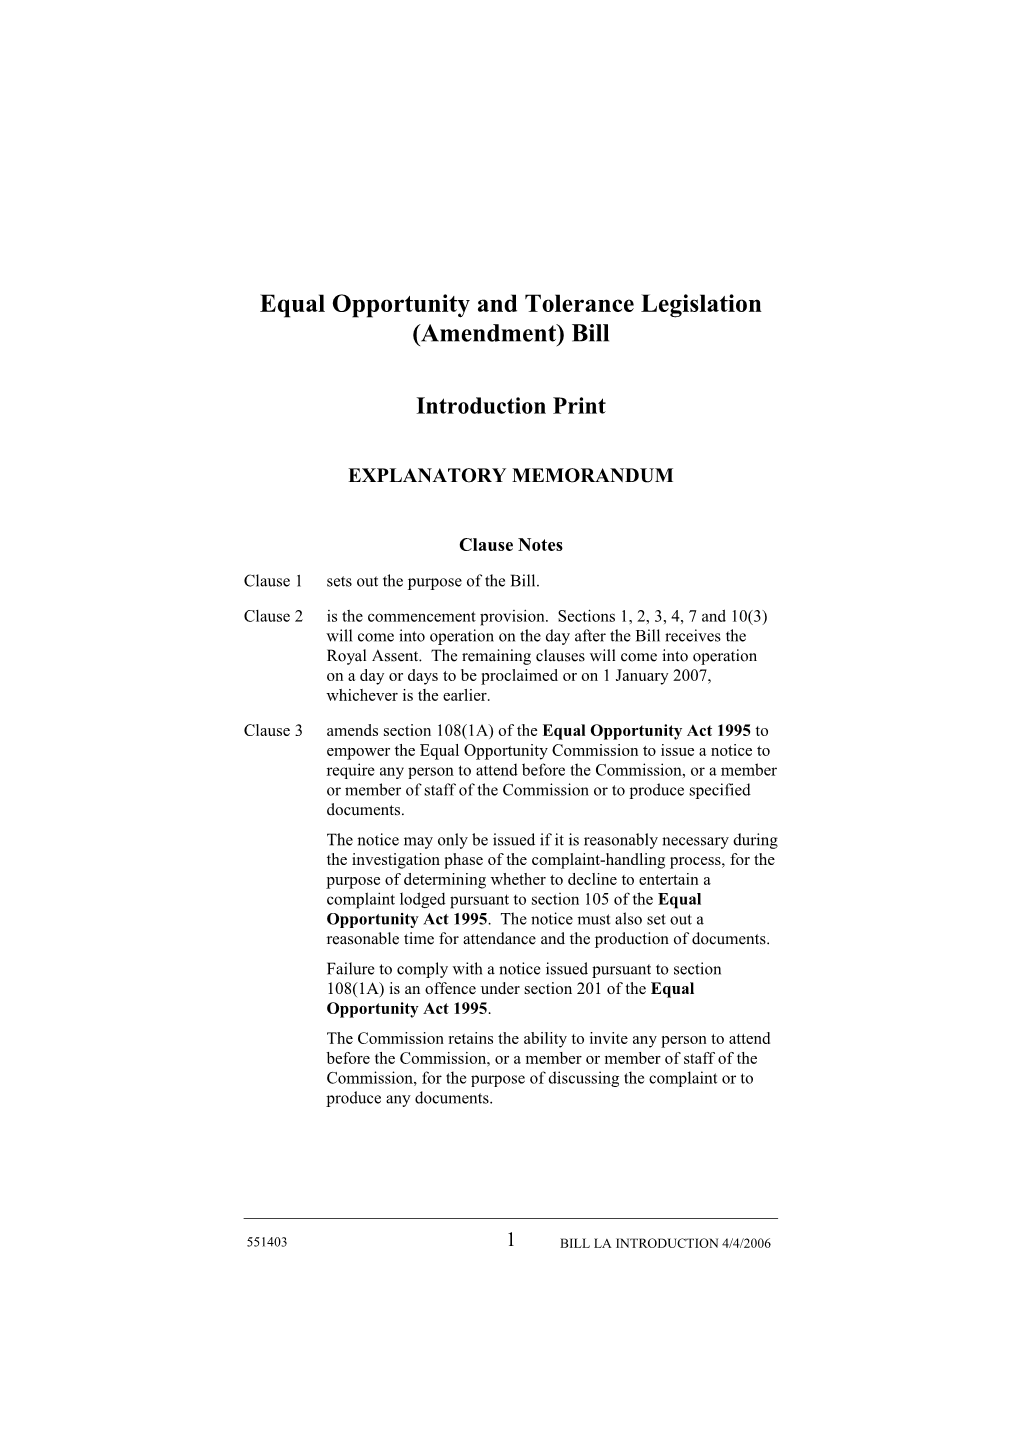 Equal Opportunity and Tolerance Legislation (Amendment) Bill